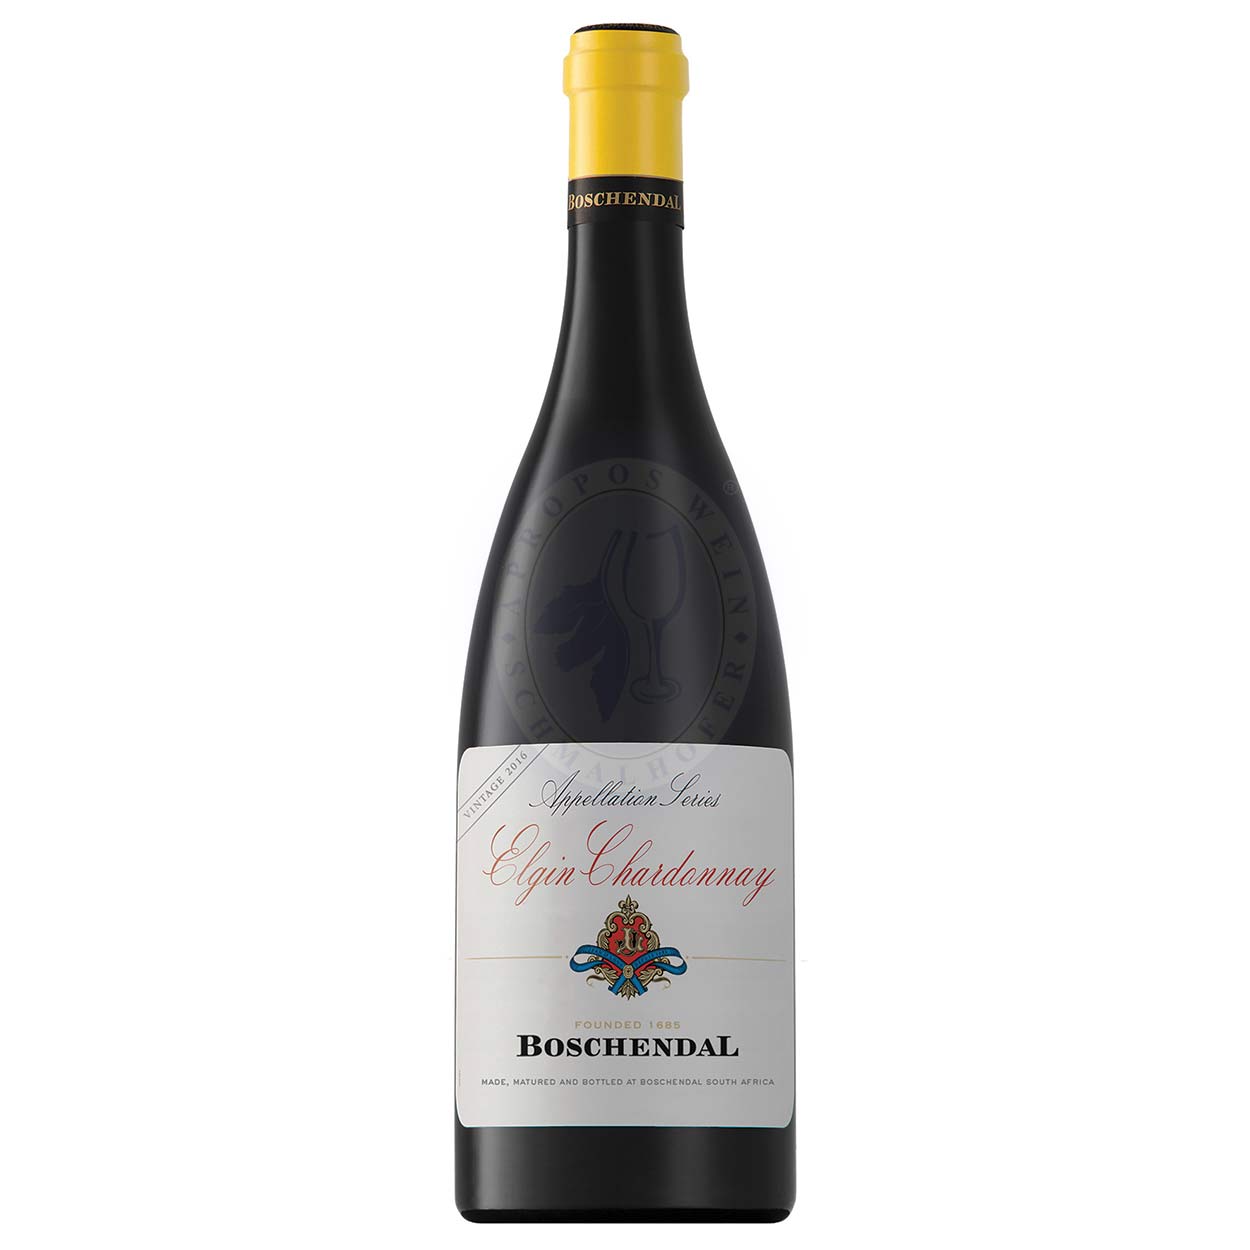 Elgin Chardonnay 2018 Boschendal 0,75l